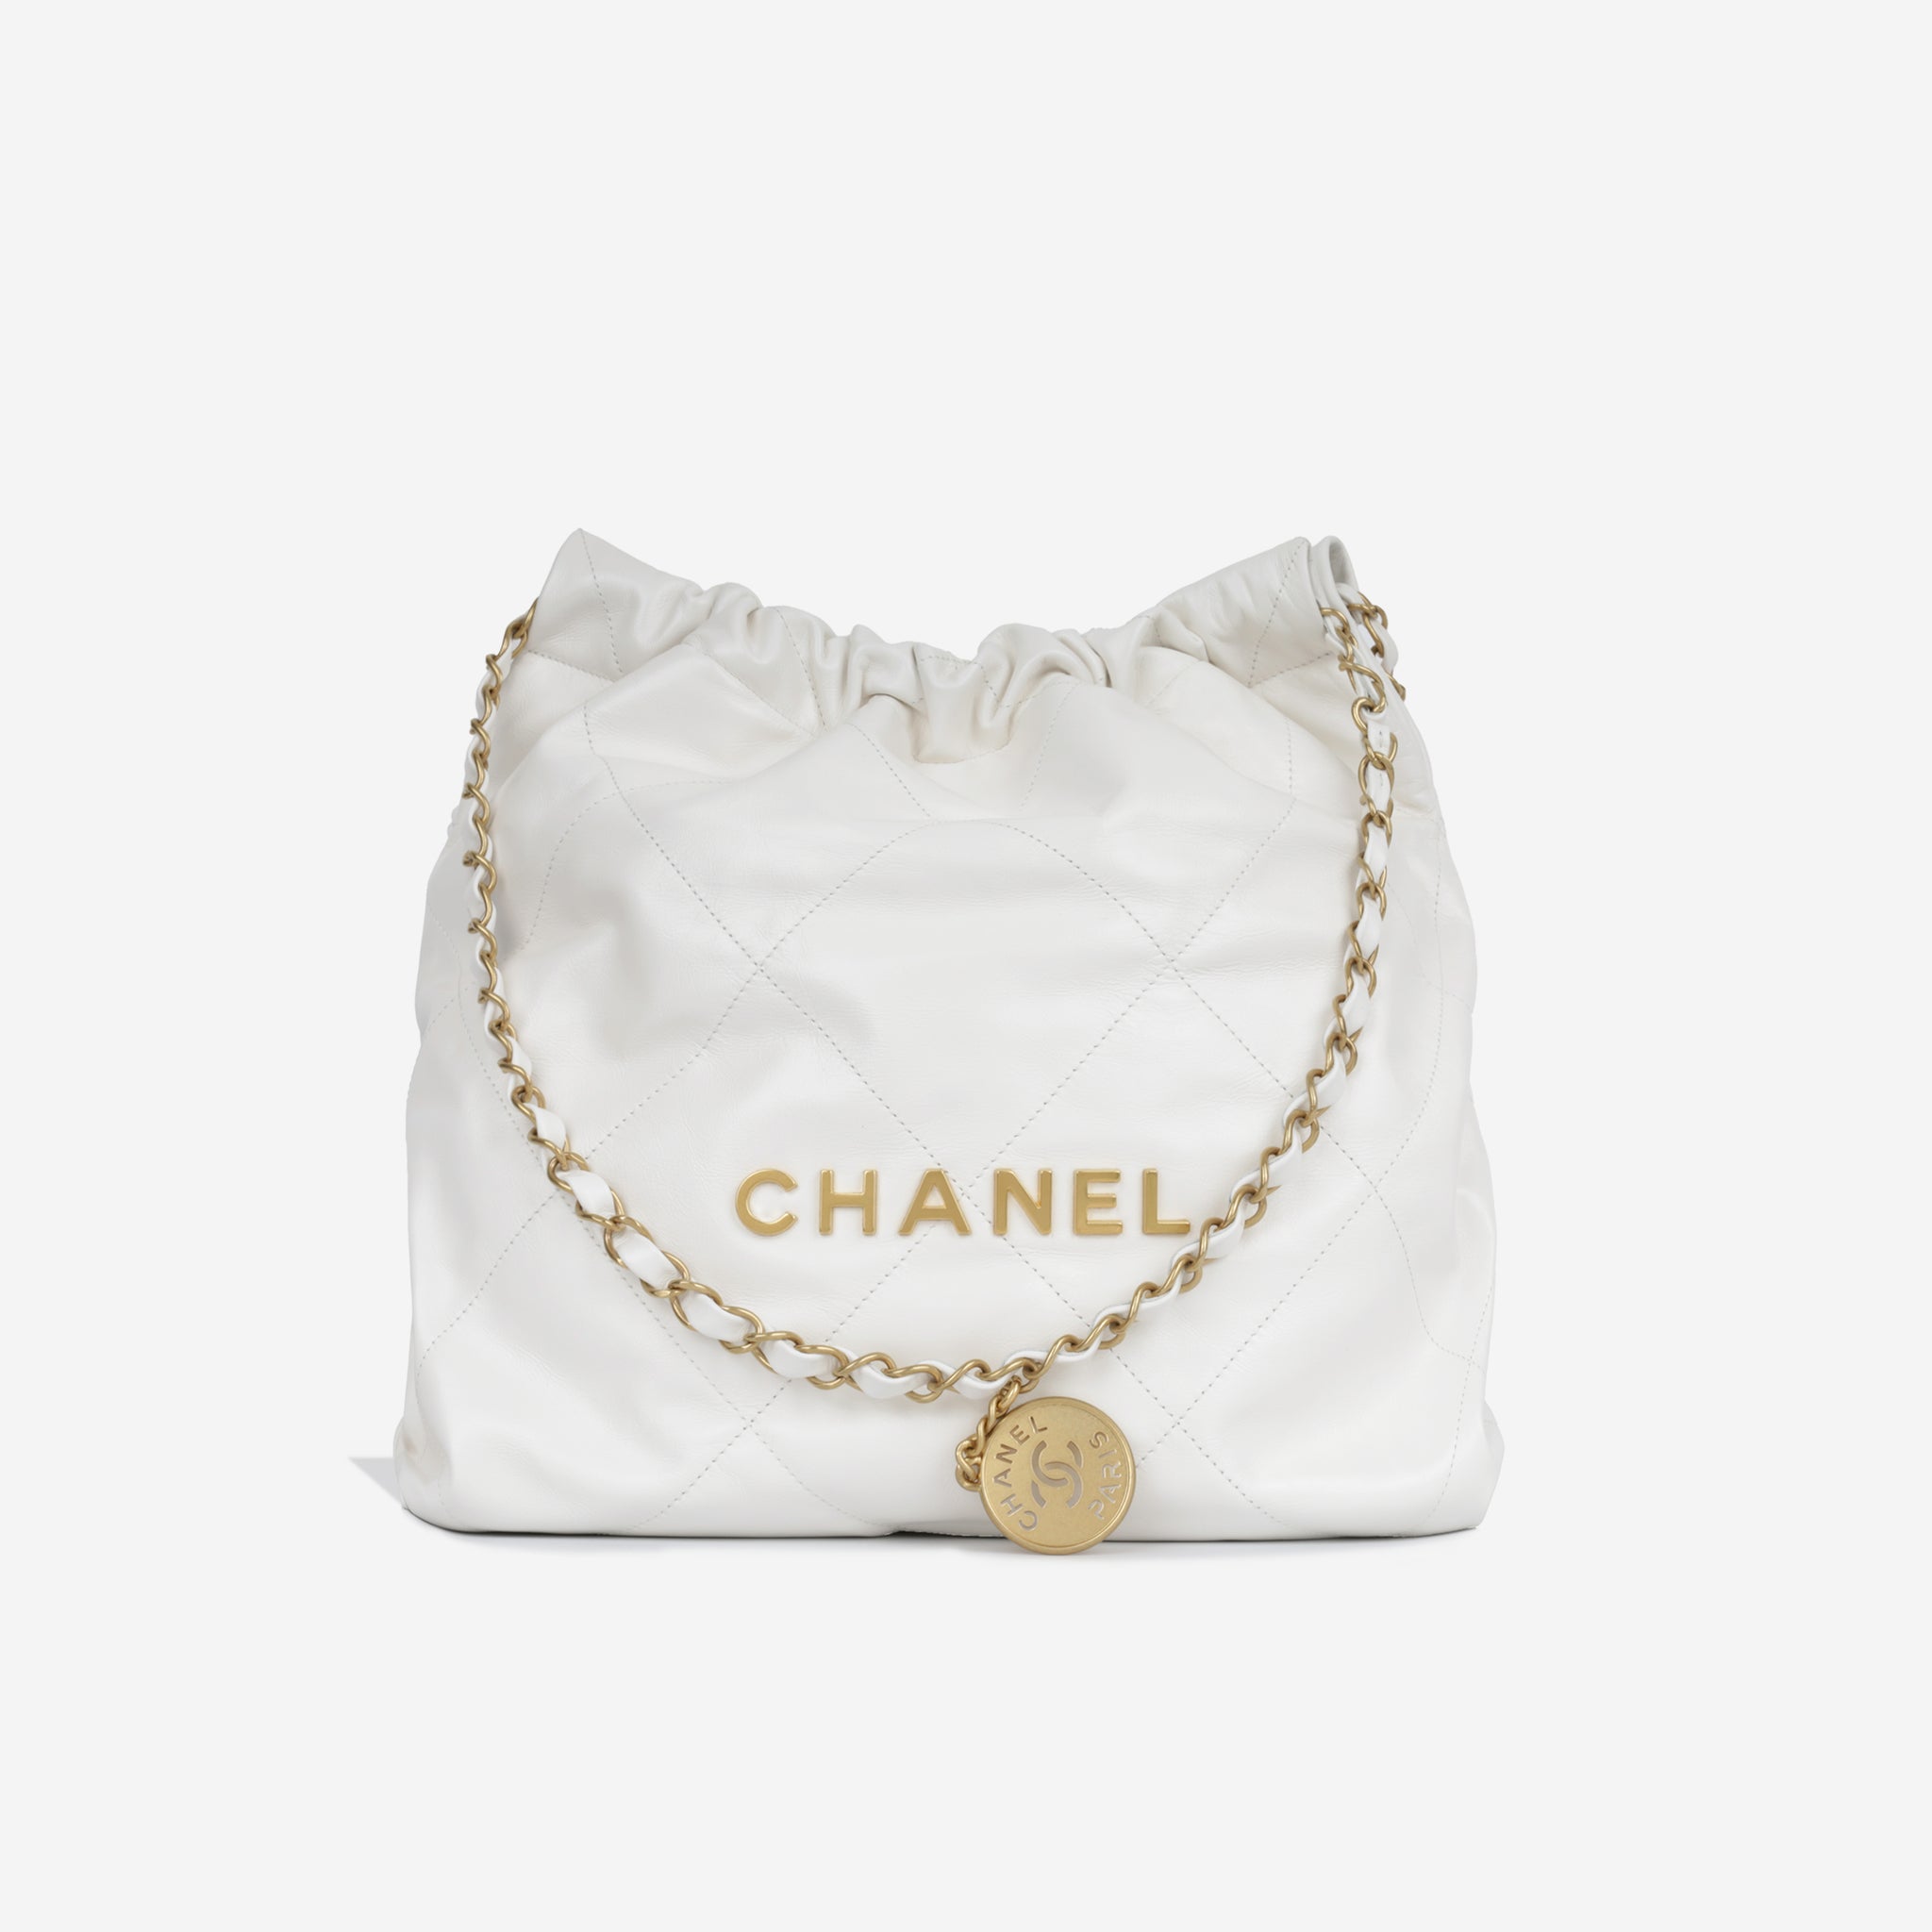 Chanel - Medium 22 Tote - White Shiny Calfskin - GHW - Plaque